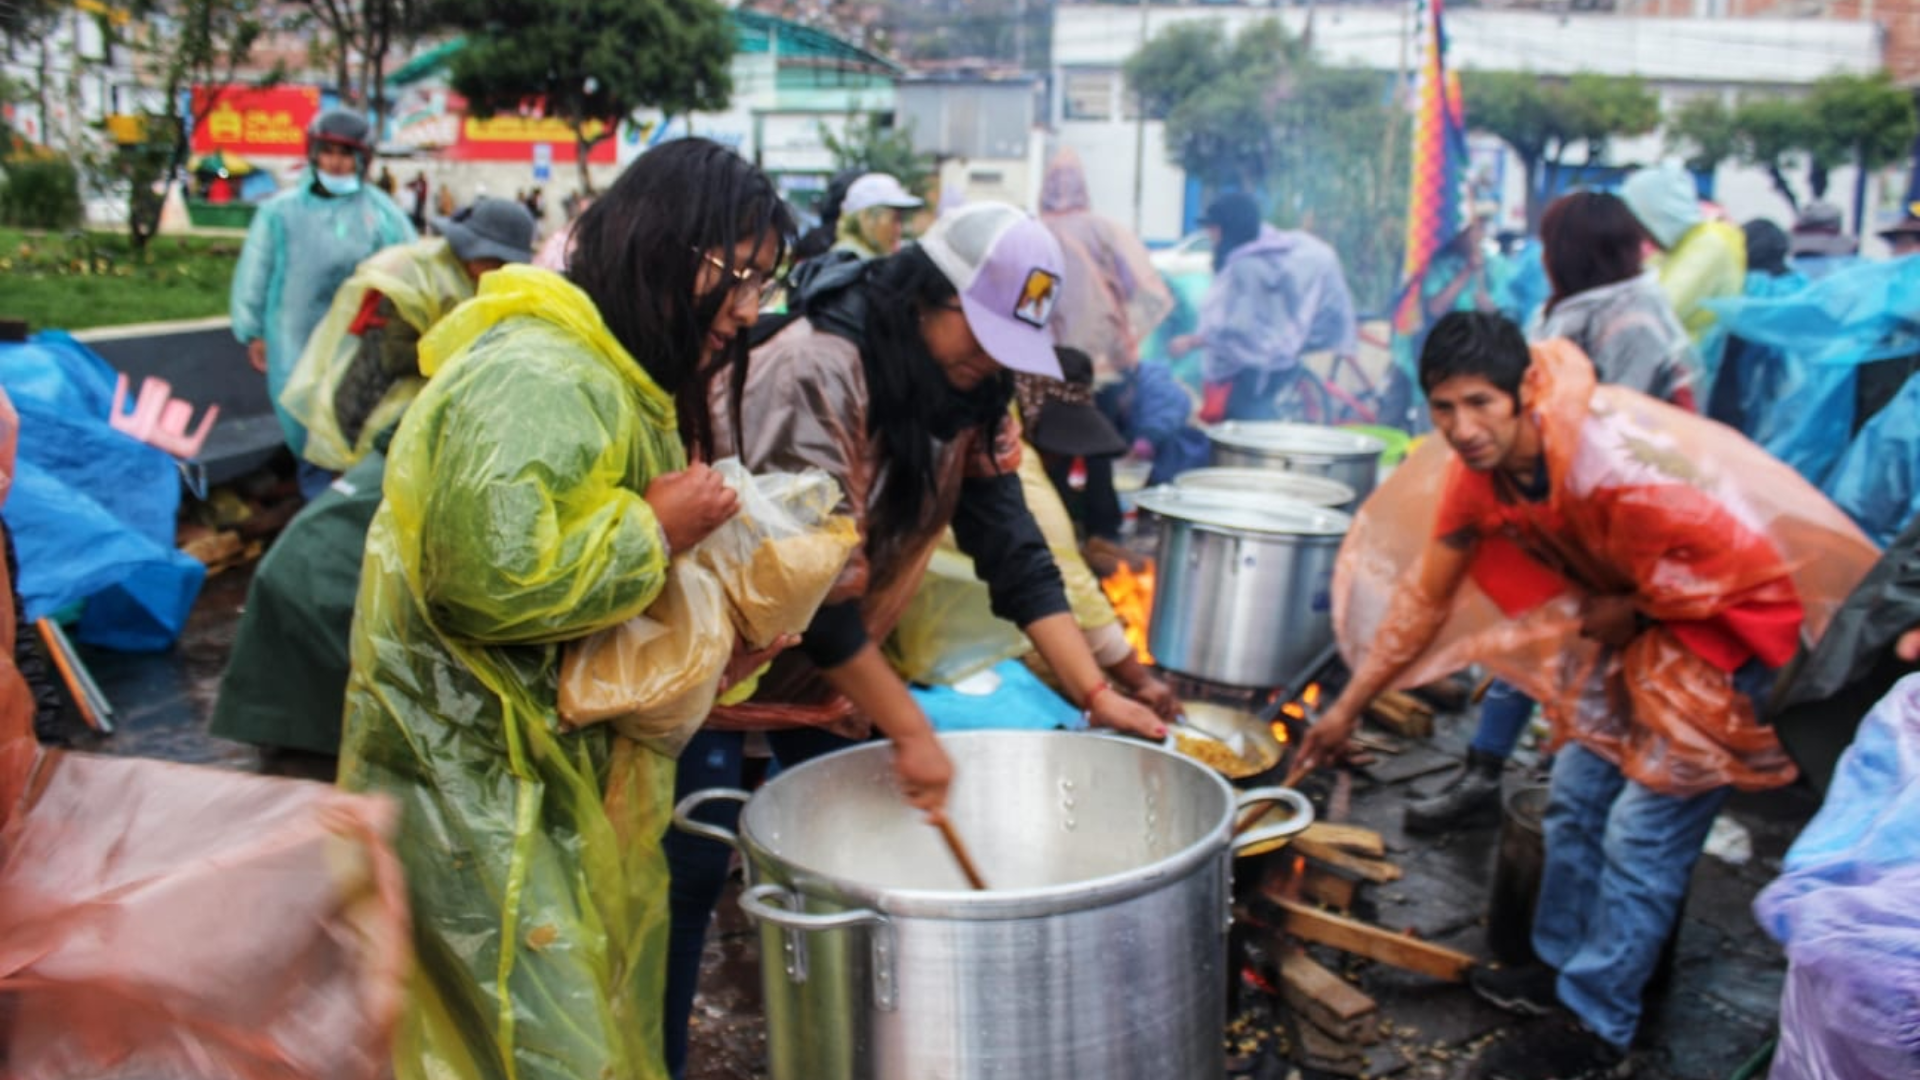 Organizan ollas comunes para manifestantes
Foto: Wilson Chilo/Wayka